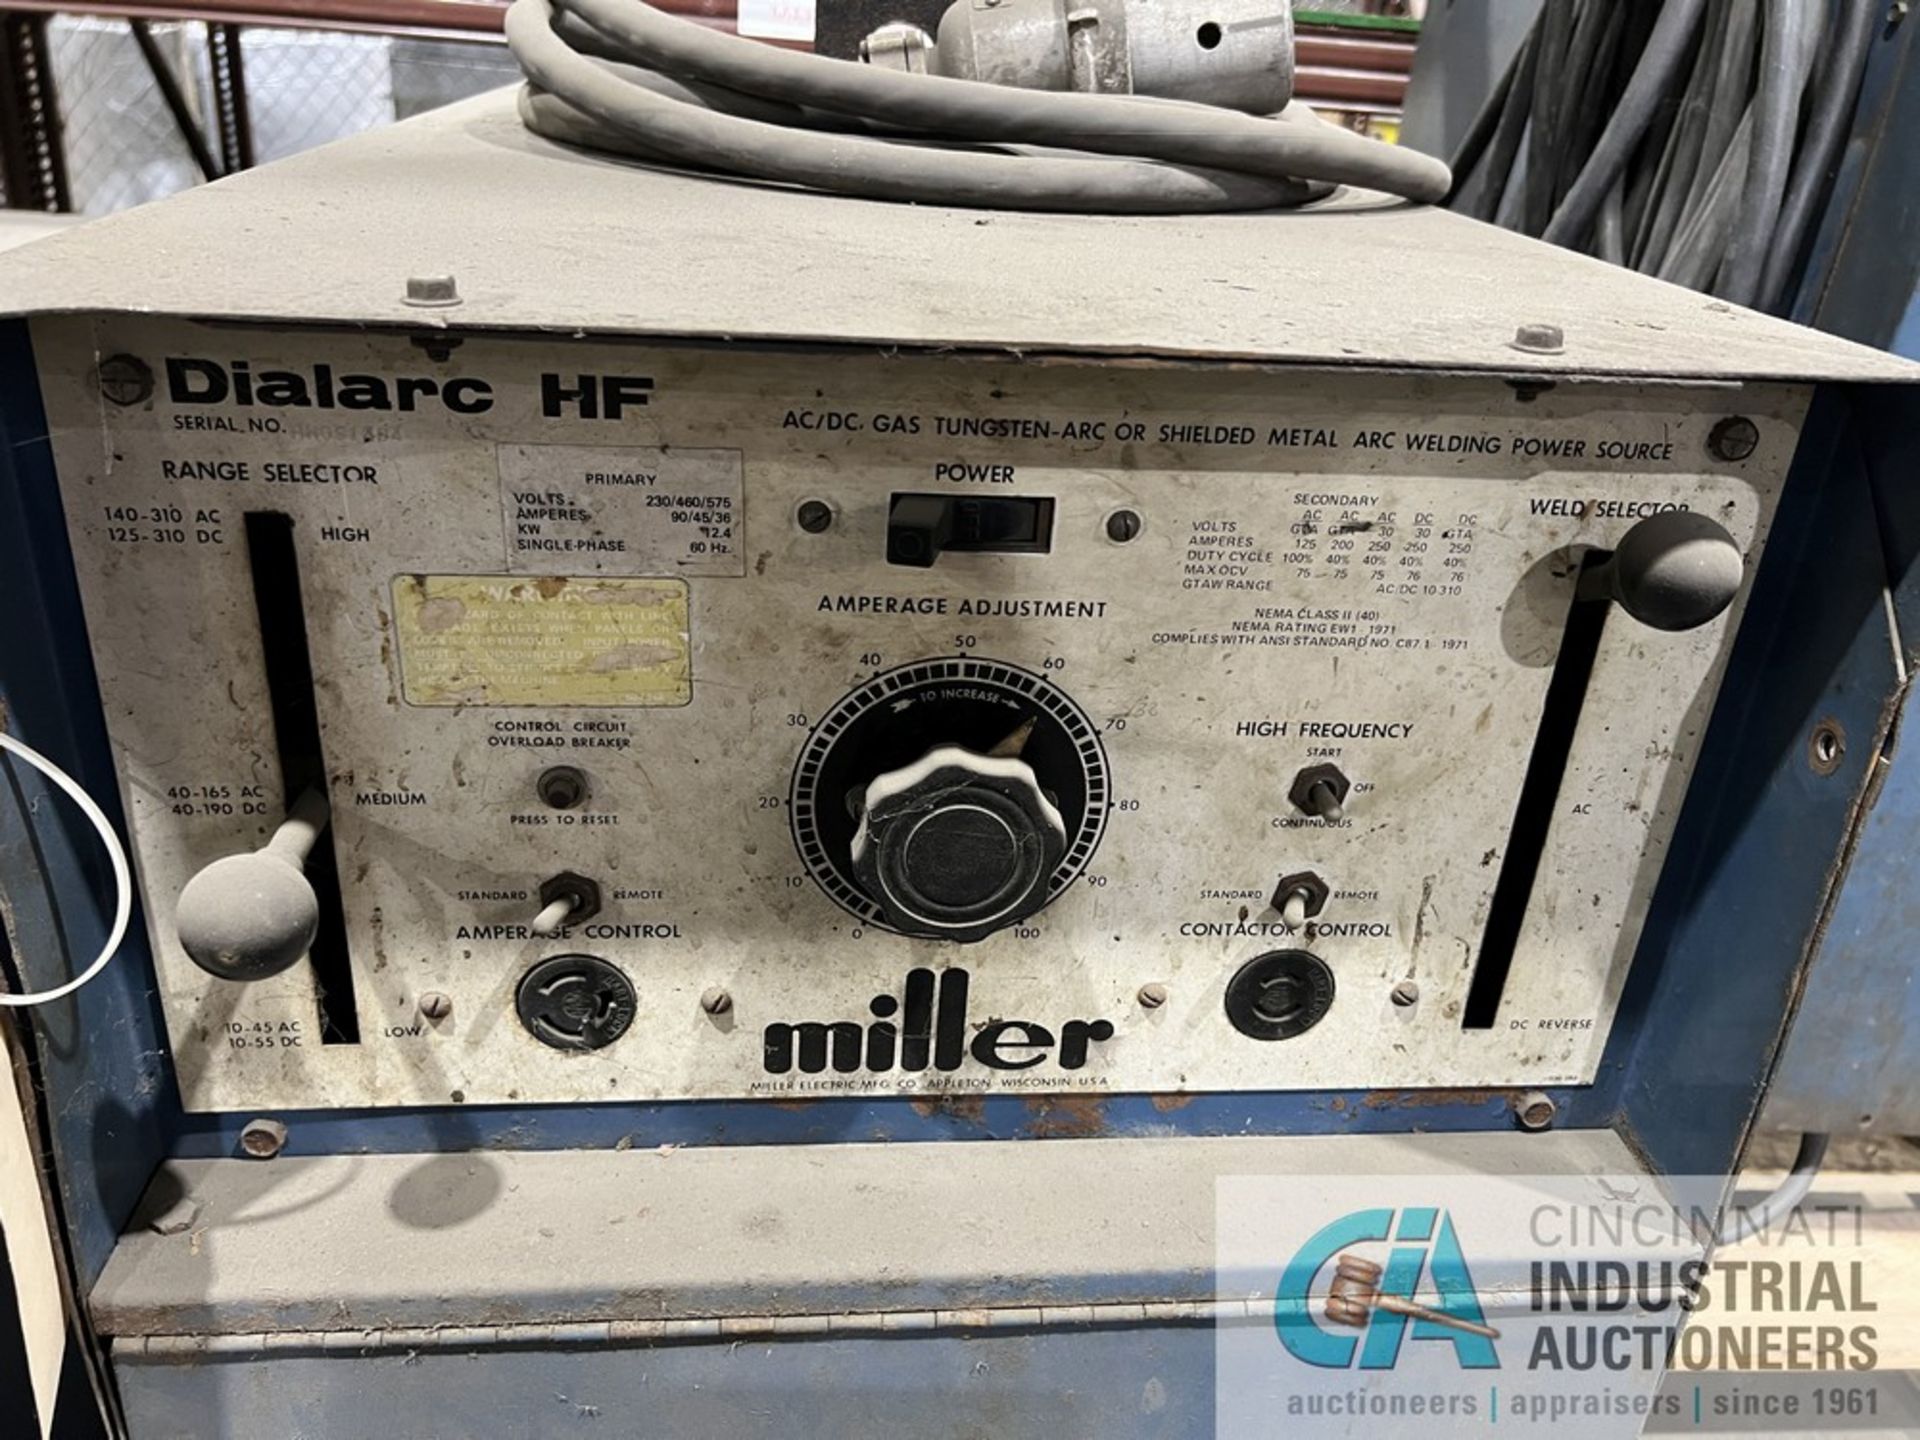 310 AMP MILLER DIALARC HF WELDER; S/N HH091894 - Image 2 of 2